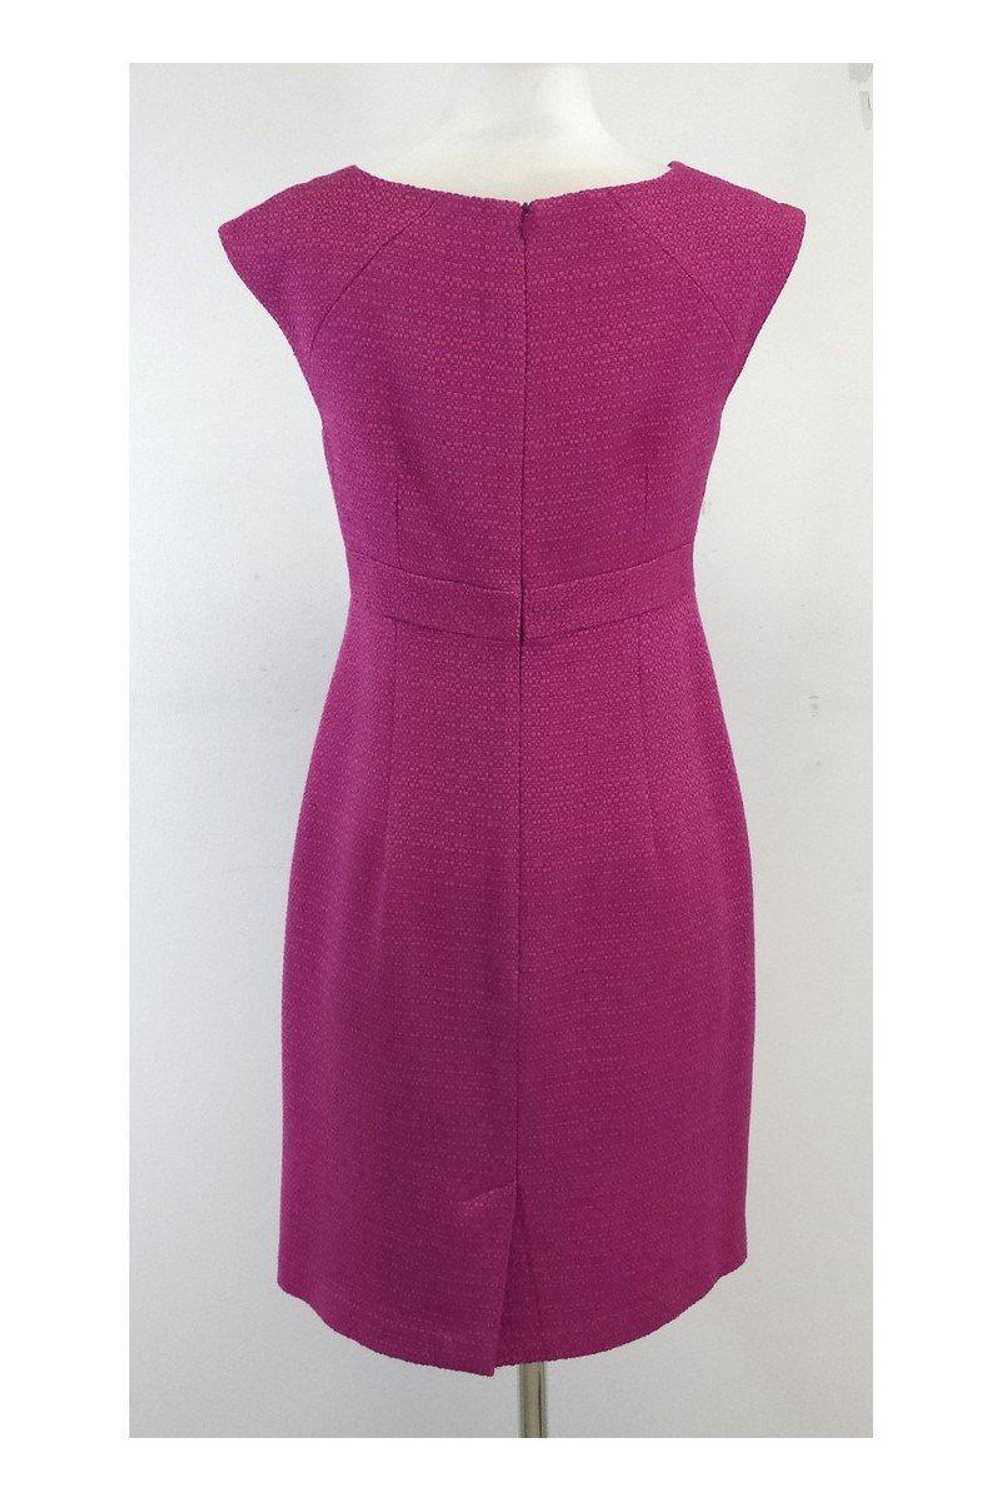 Trina Turk - Sleeveless Pink Tweed Dress Sz 8 - image 3